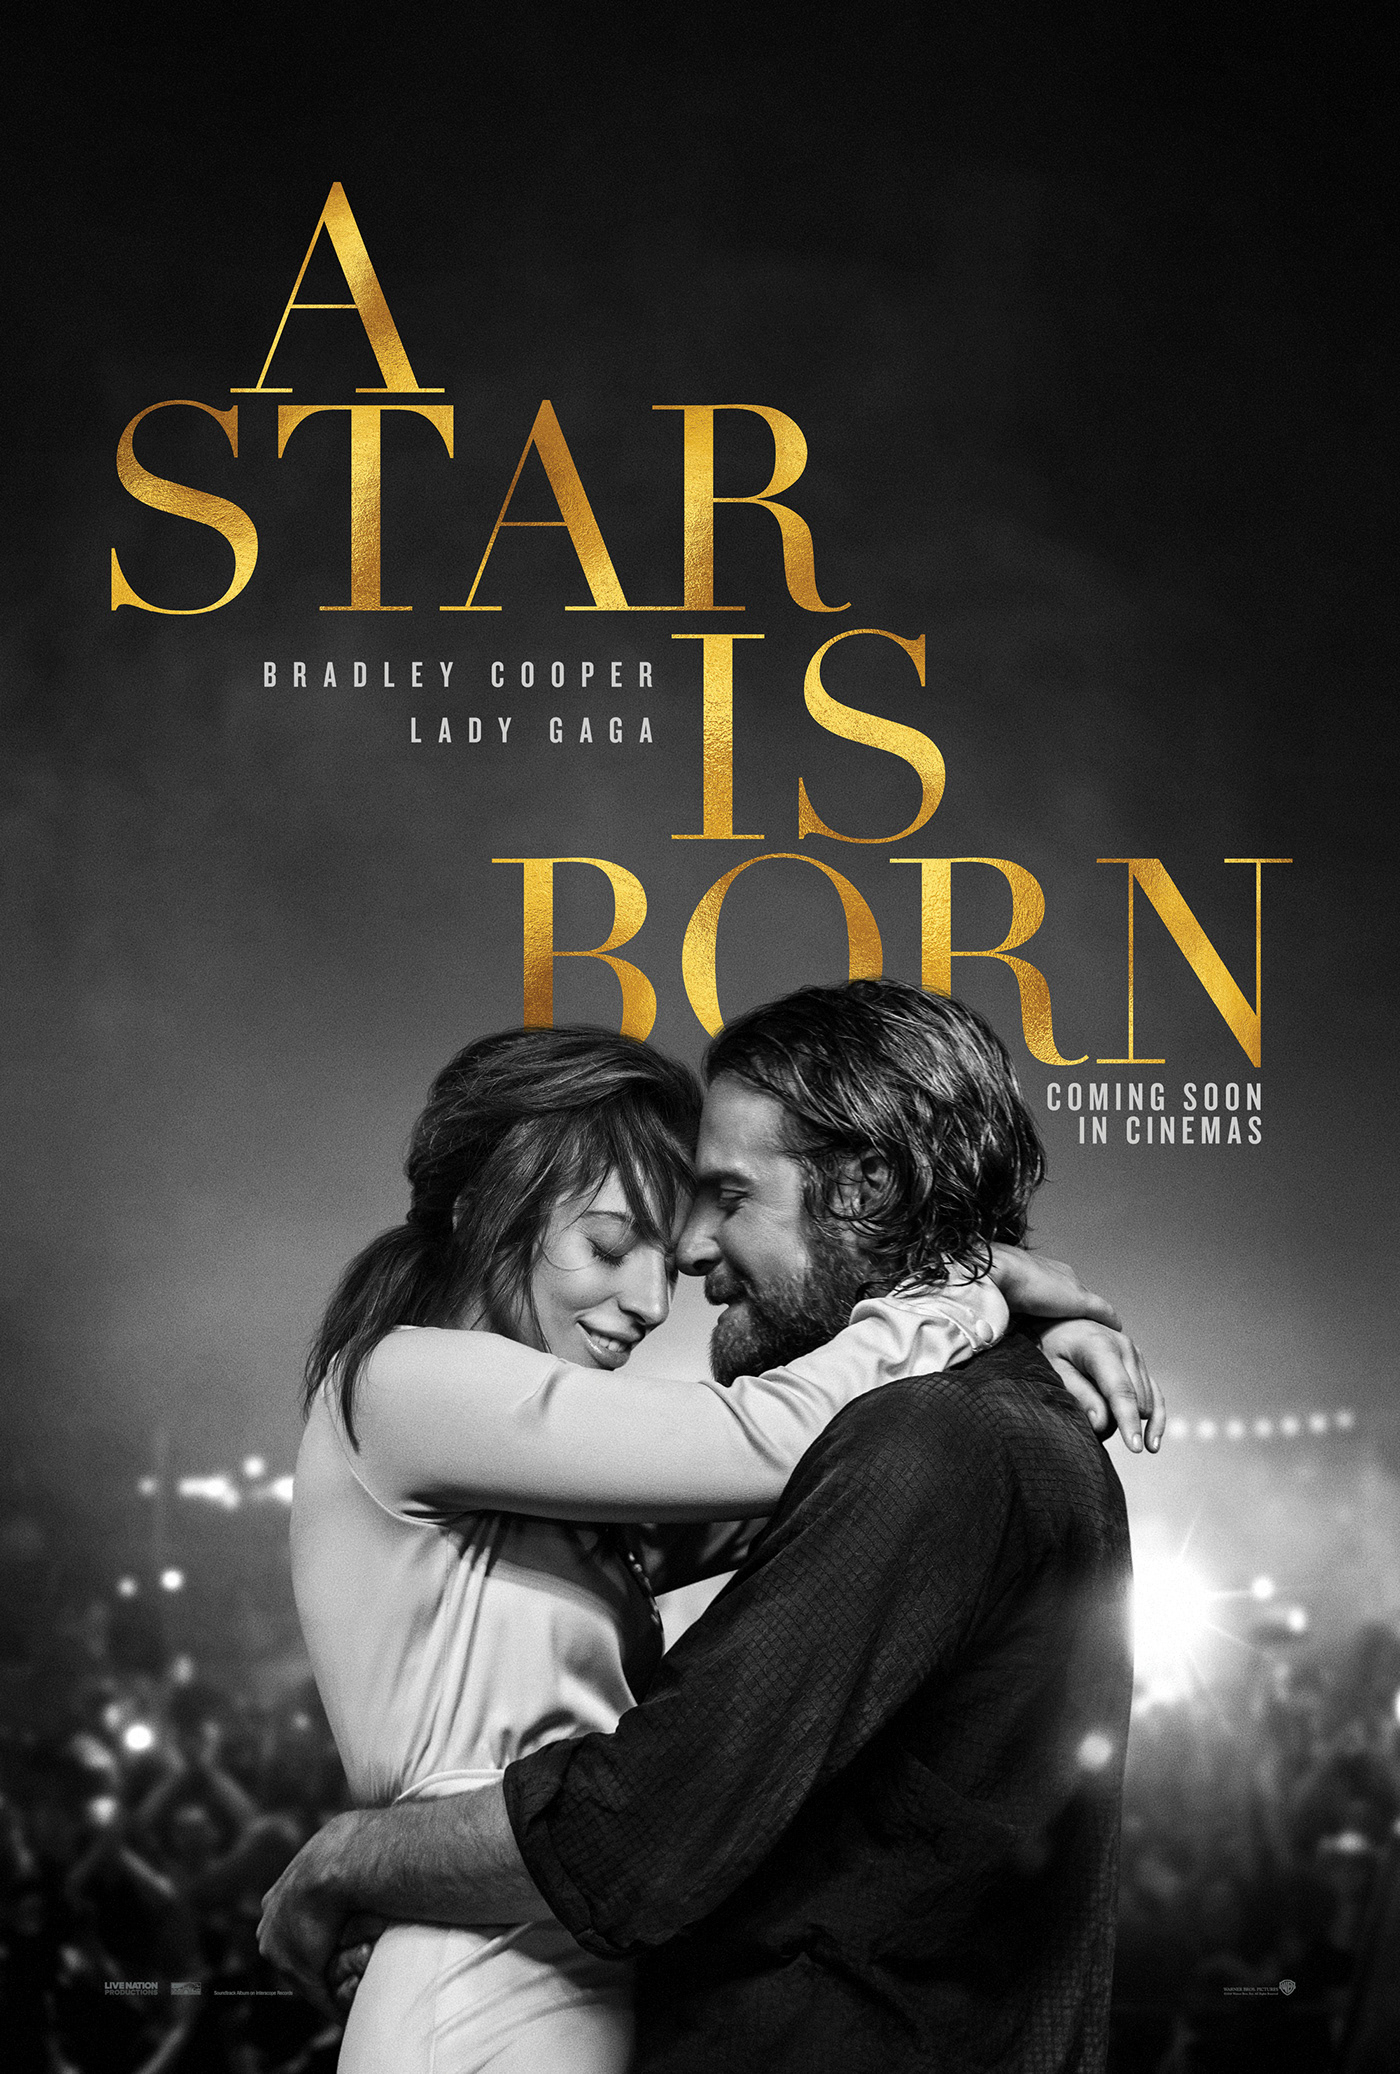 star is born Lady Gaga bradley cooper poster one sheet key art movie poster Stefanie Germanotta shallow design